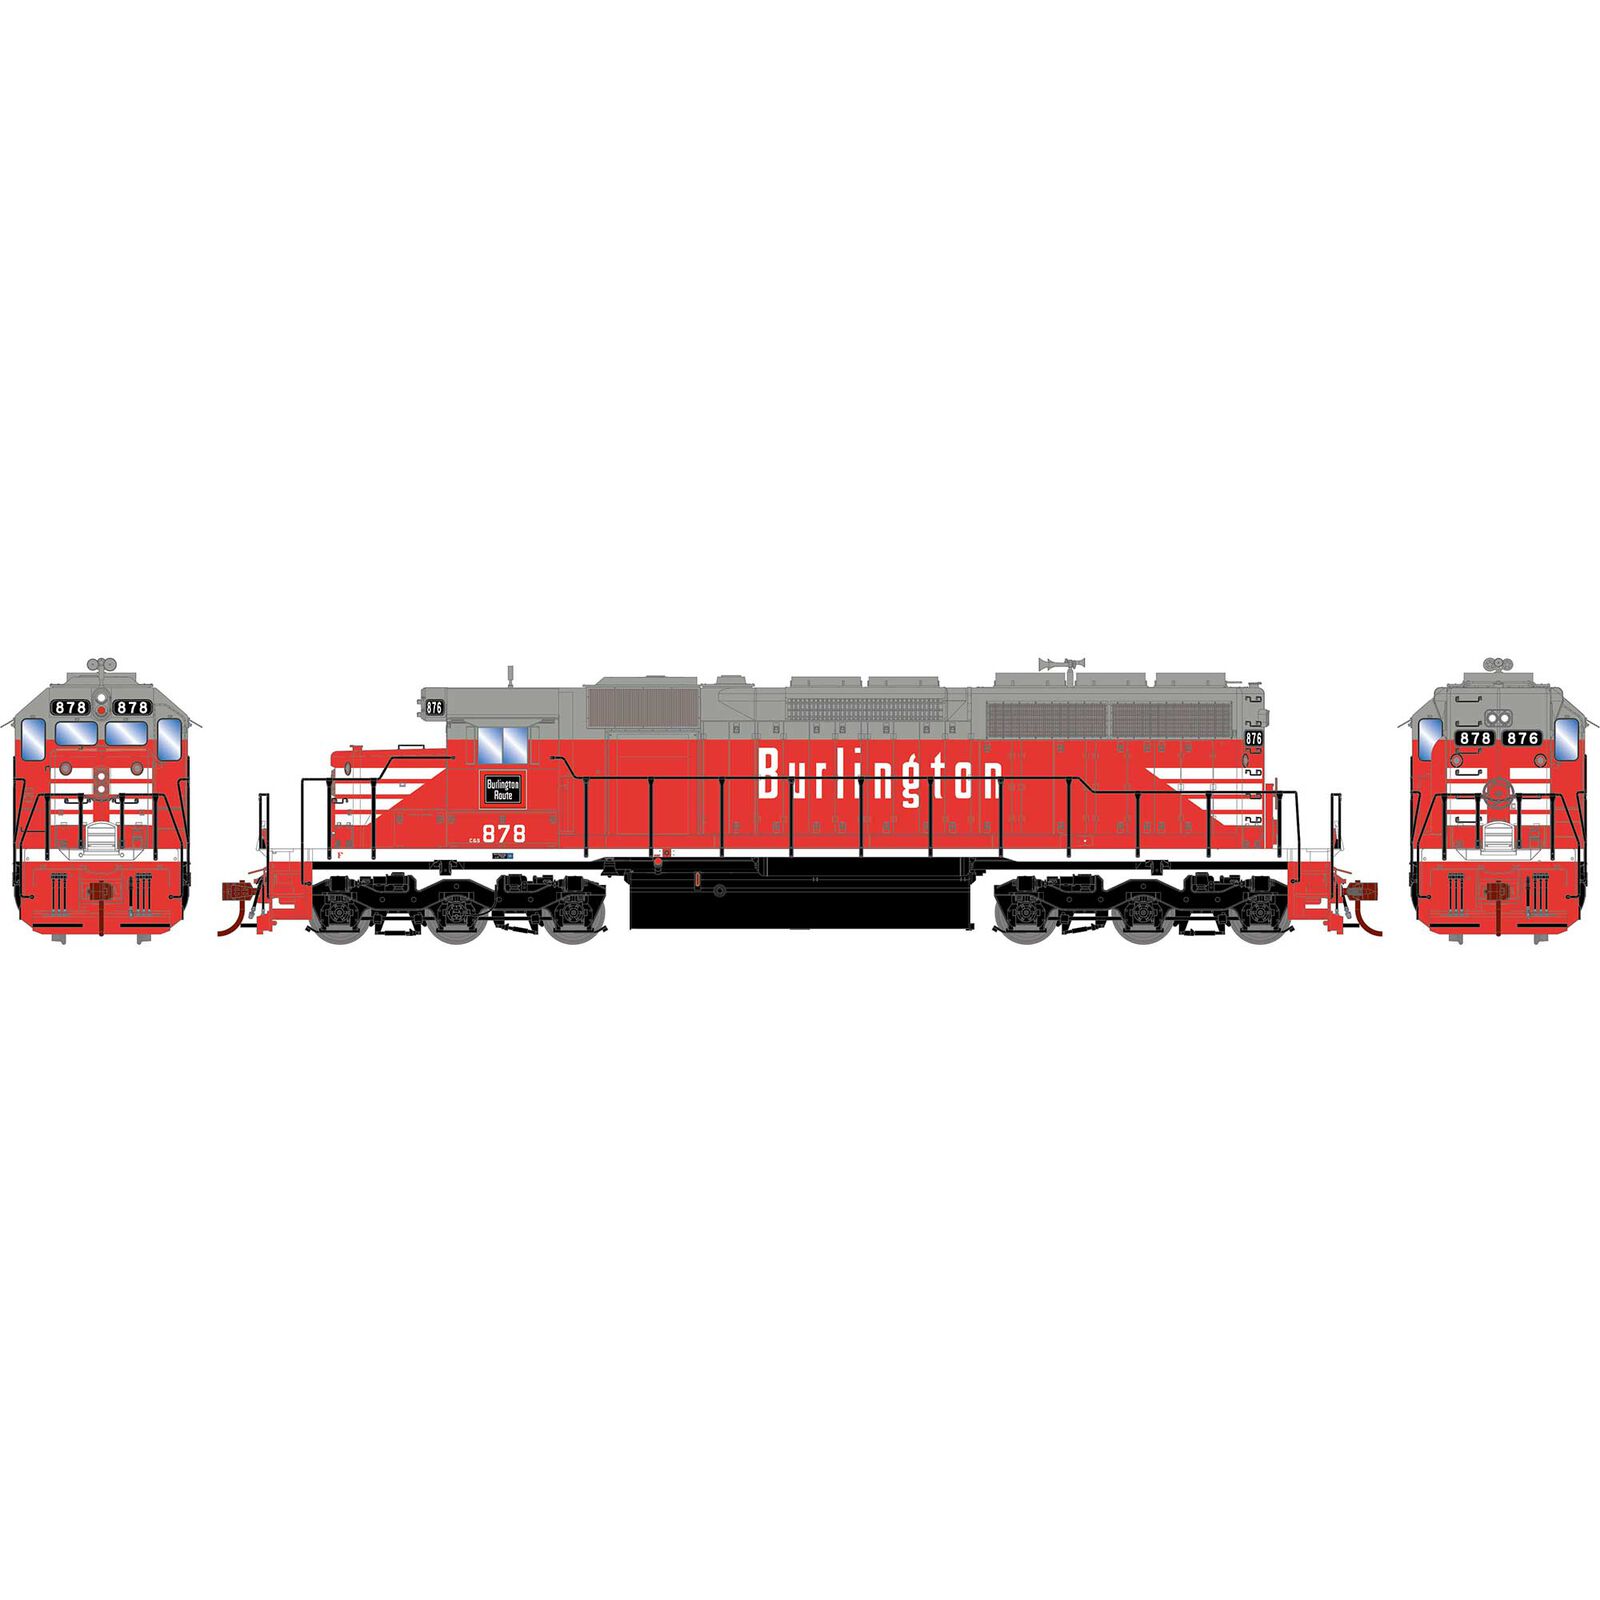 HO SD40 Locomotive, Colorado & Southern #878